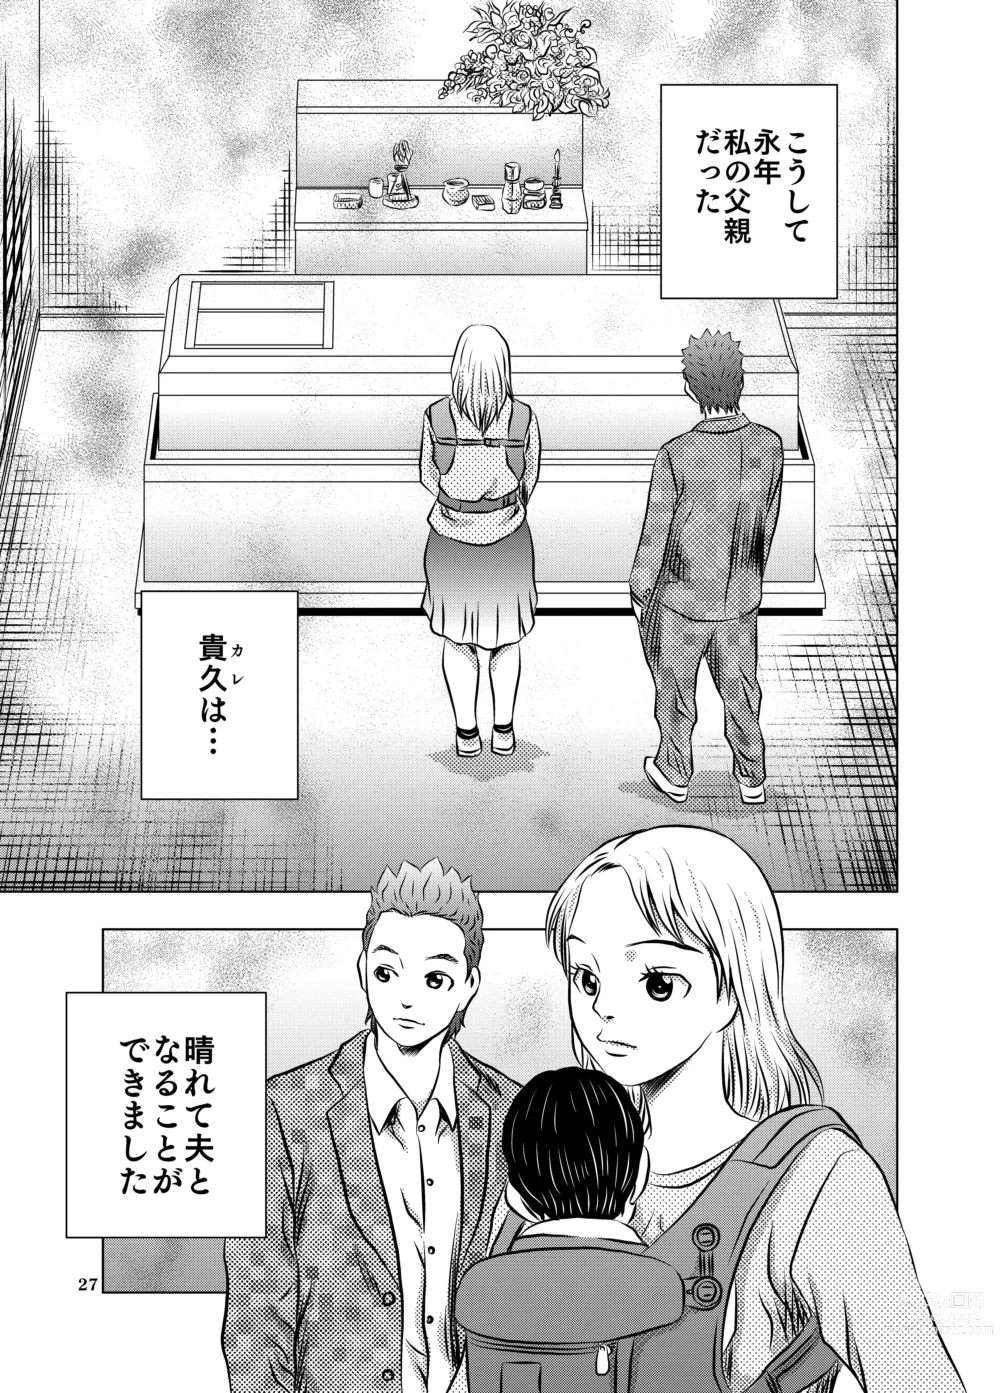 Page 27 of doujinshi Nagai Yoru…